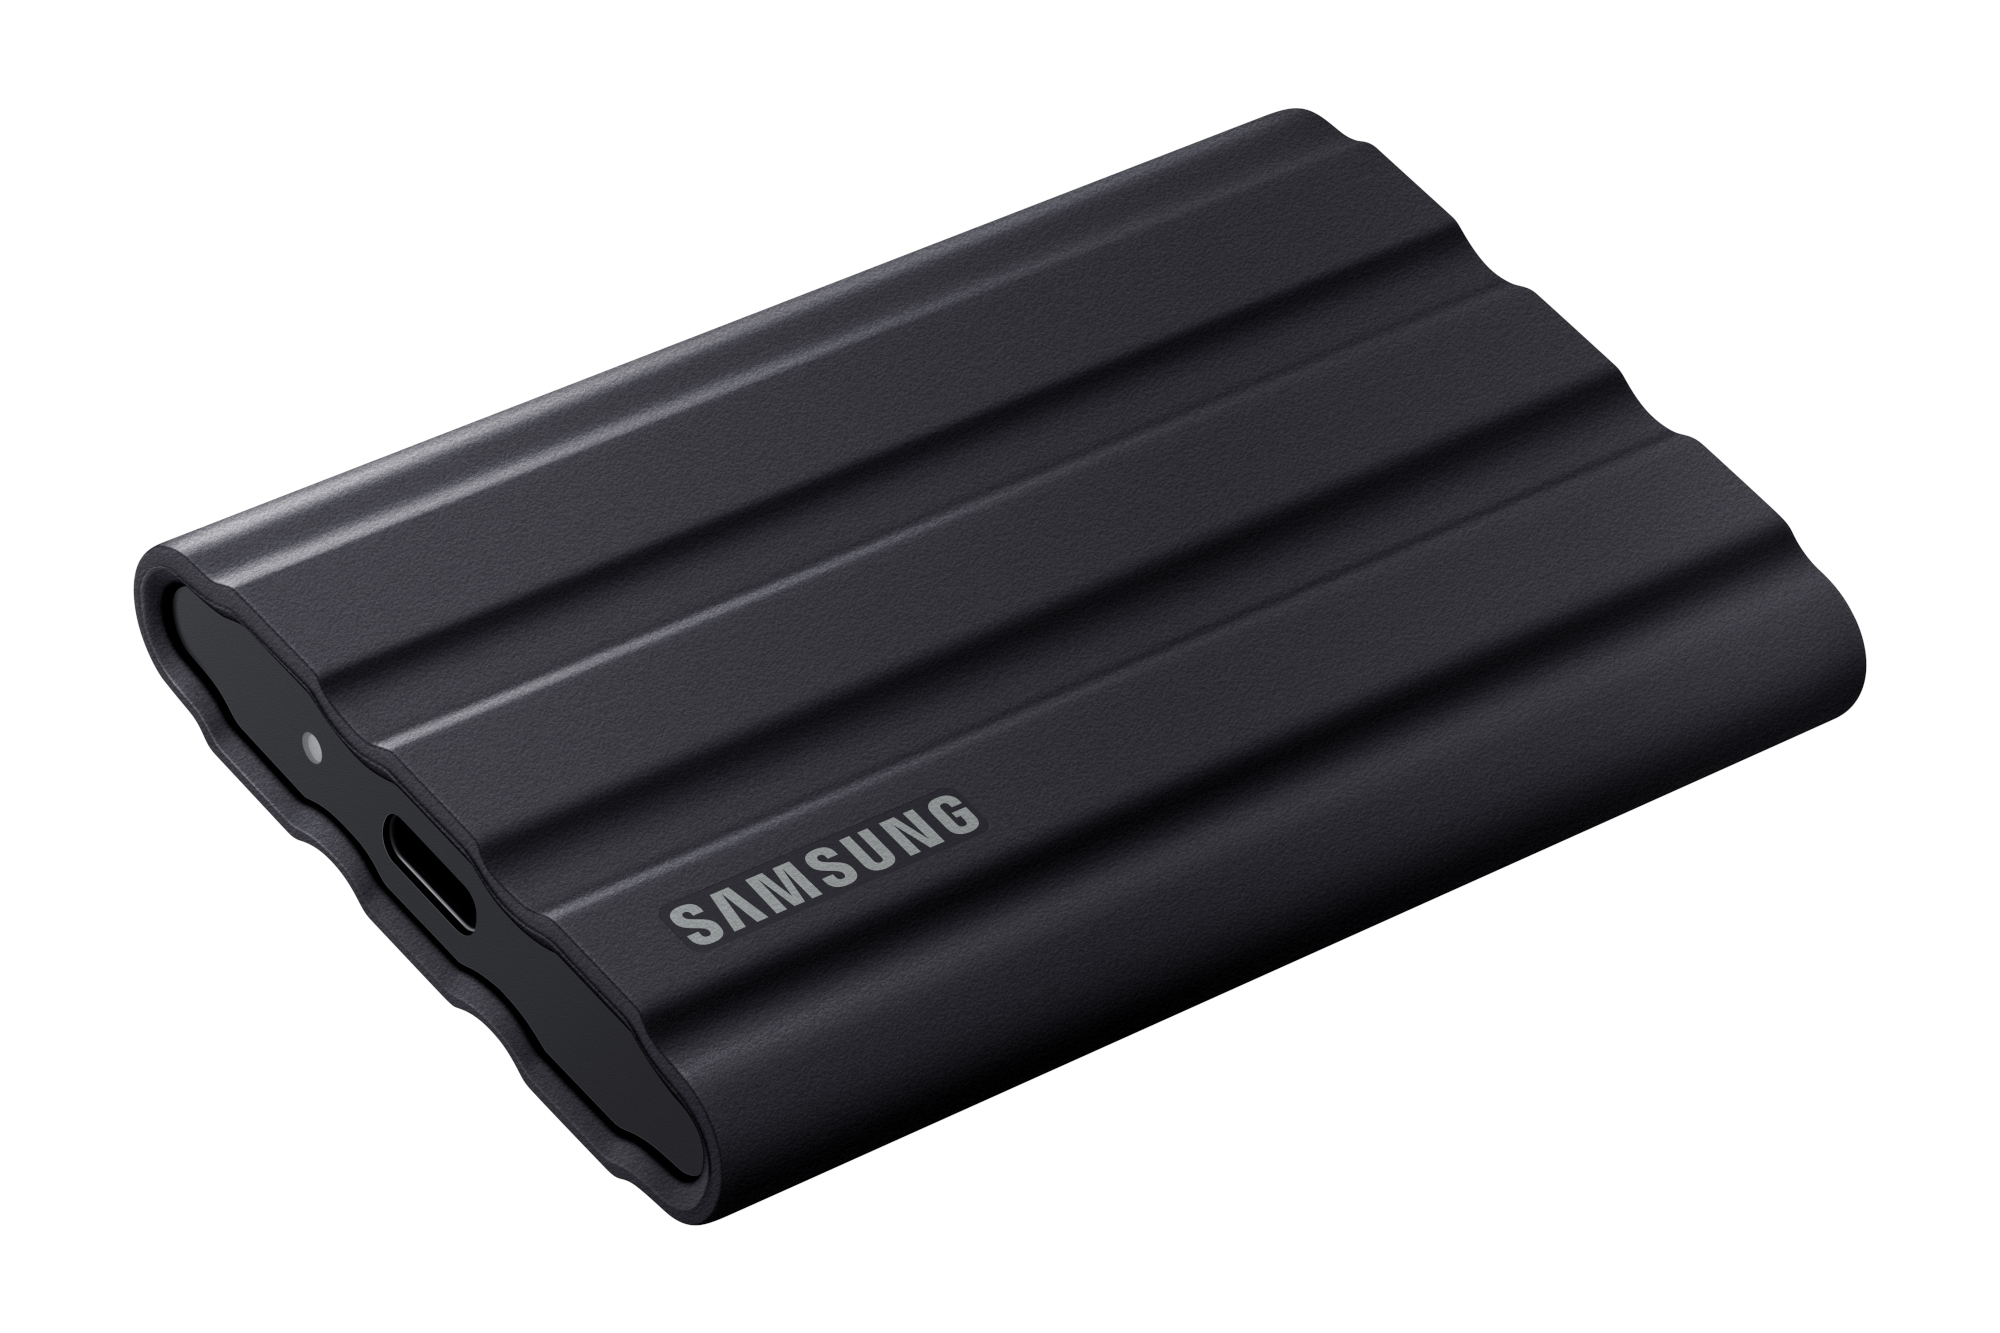 Samsung T7 Shield (4TB) - Best high-capacity option